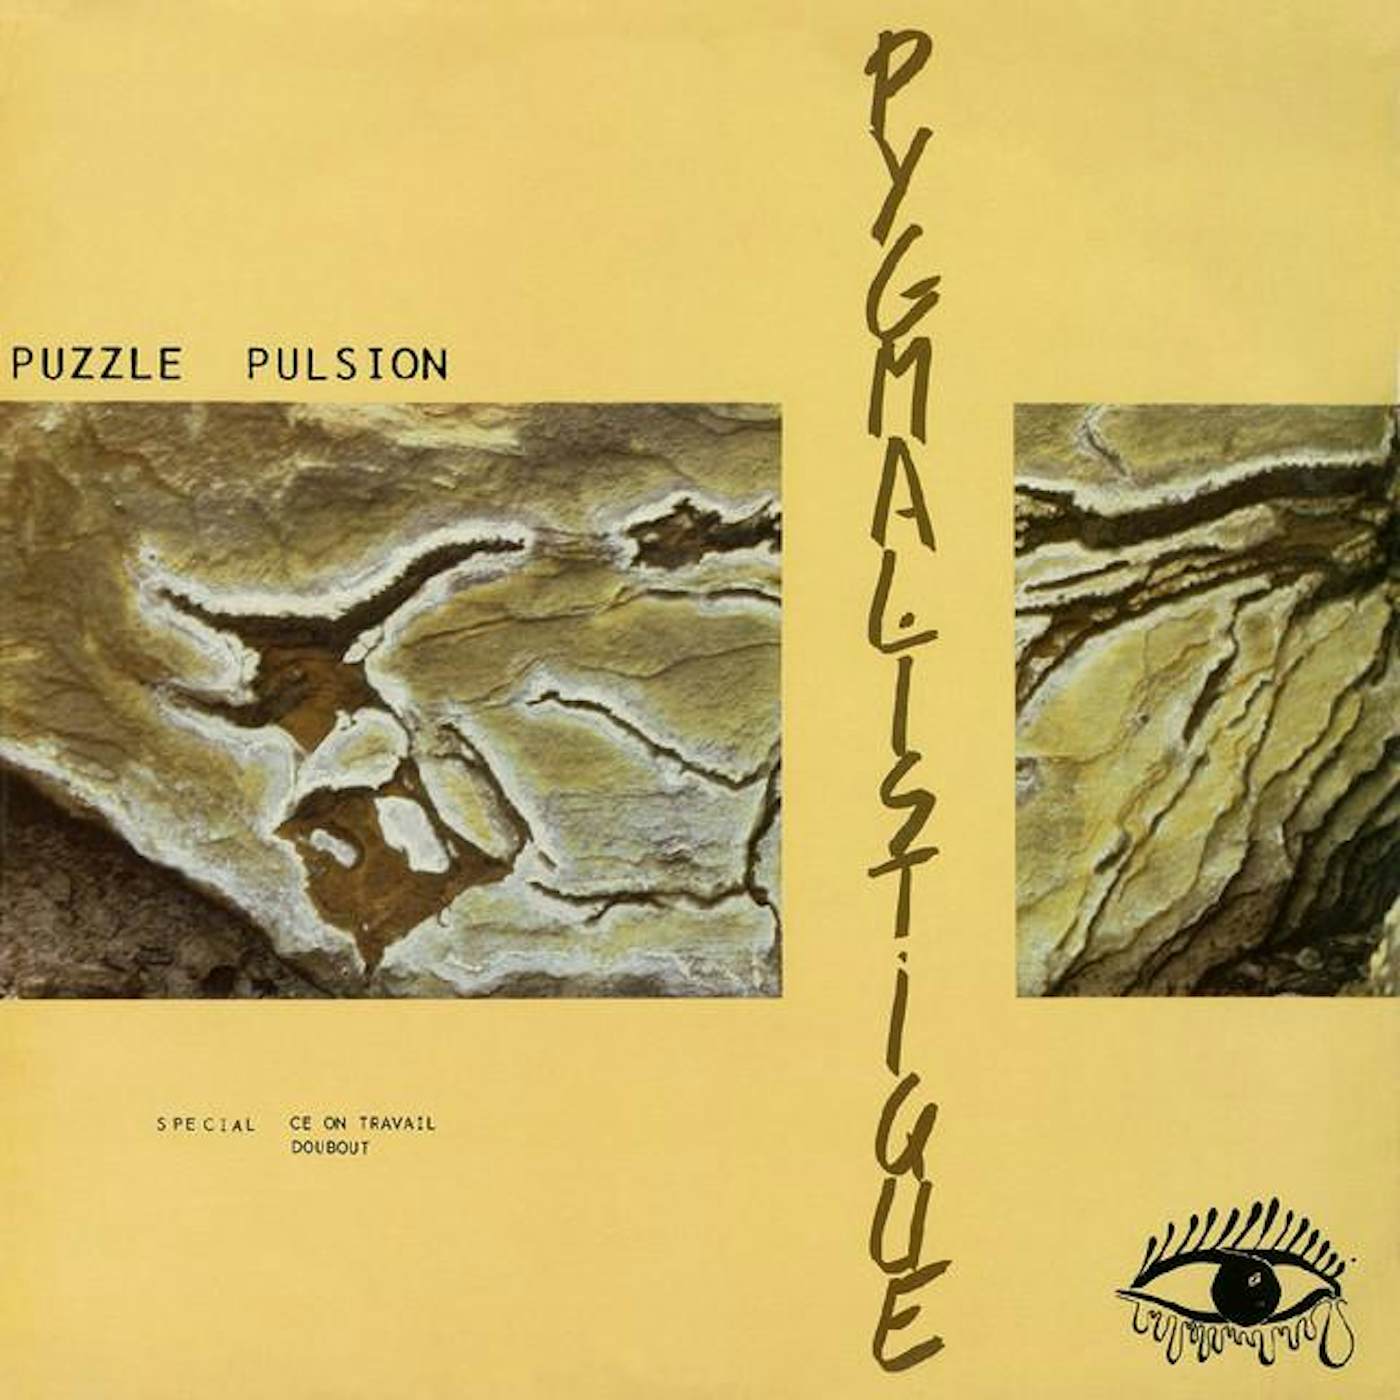 Puzzle Pulsion